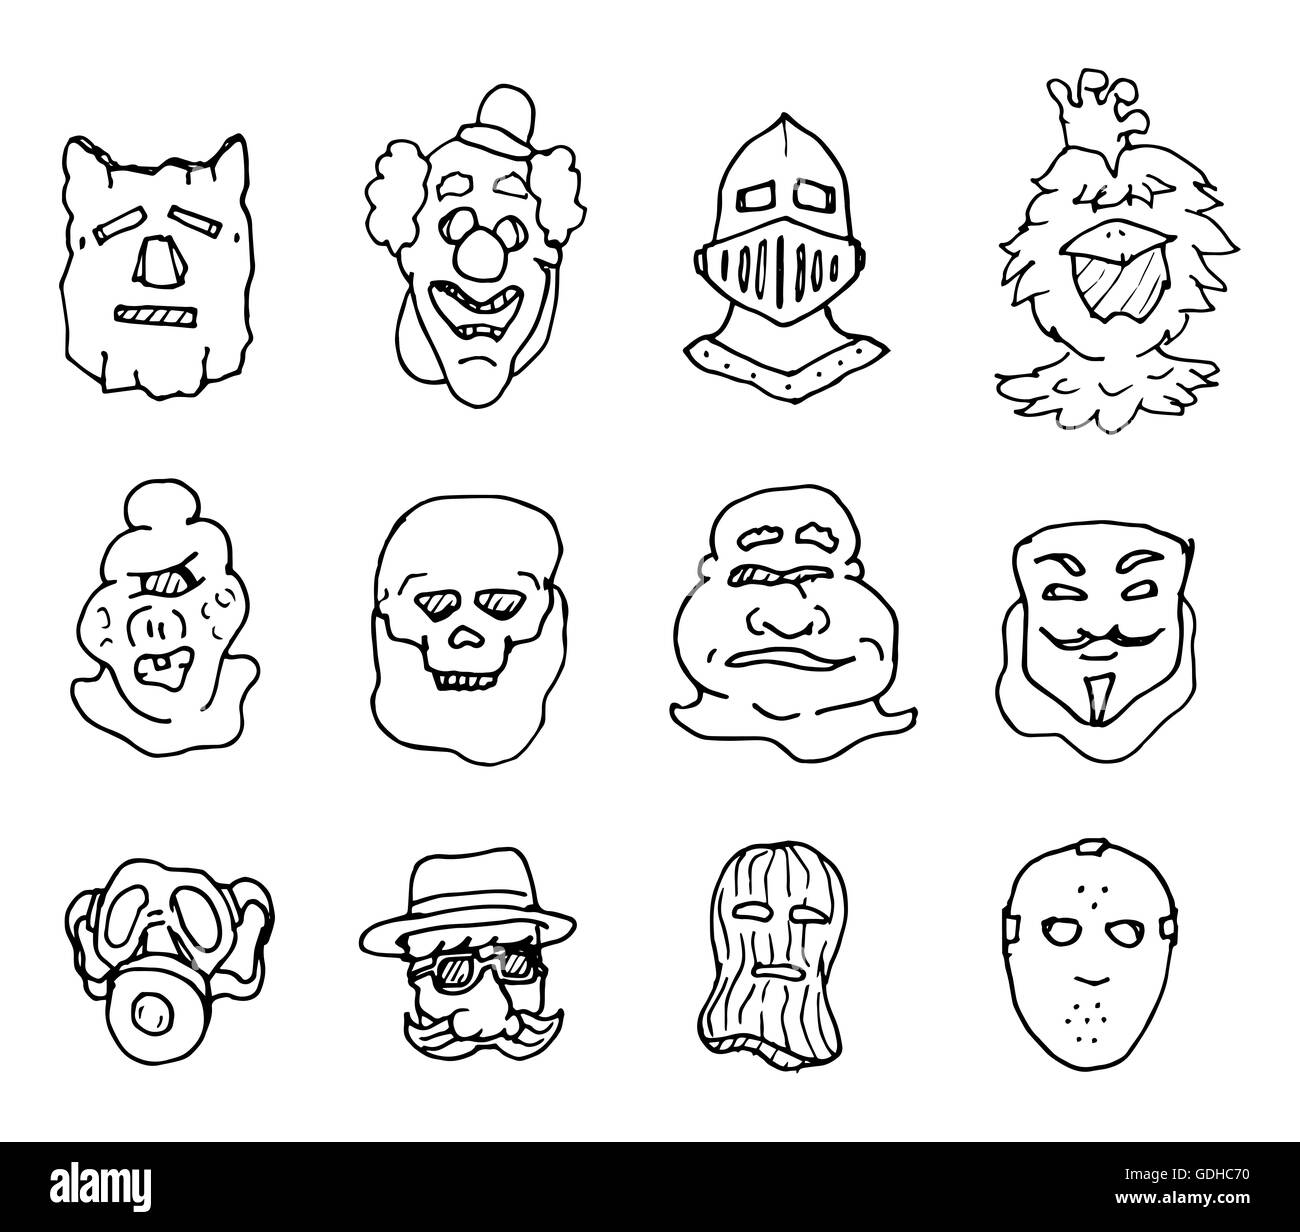 Cartoon illustration des différents types de jeu de masques et de costumes Banque D'Images